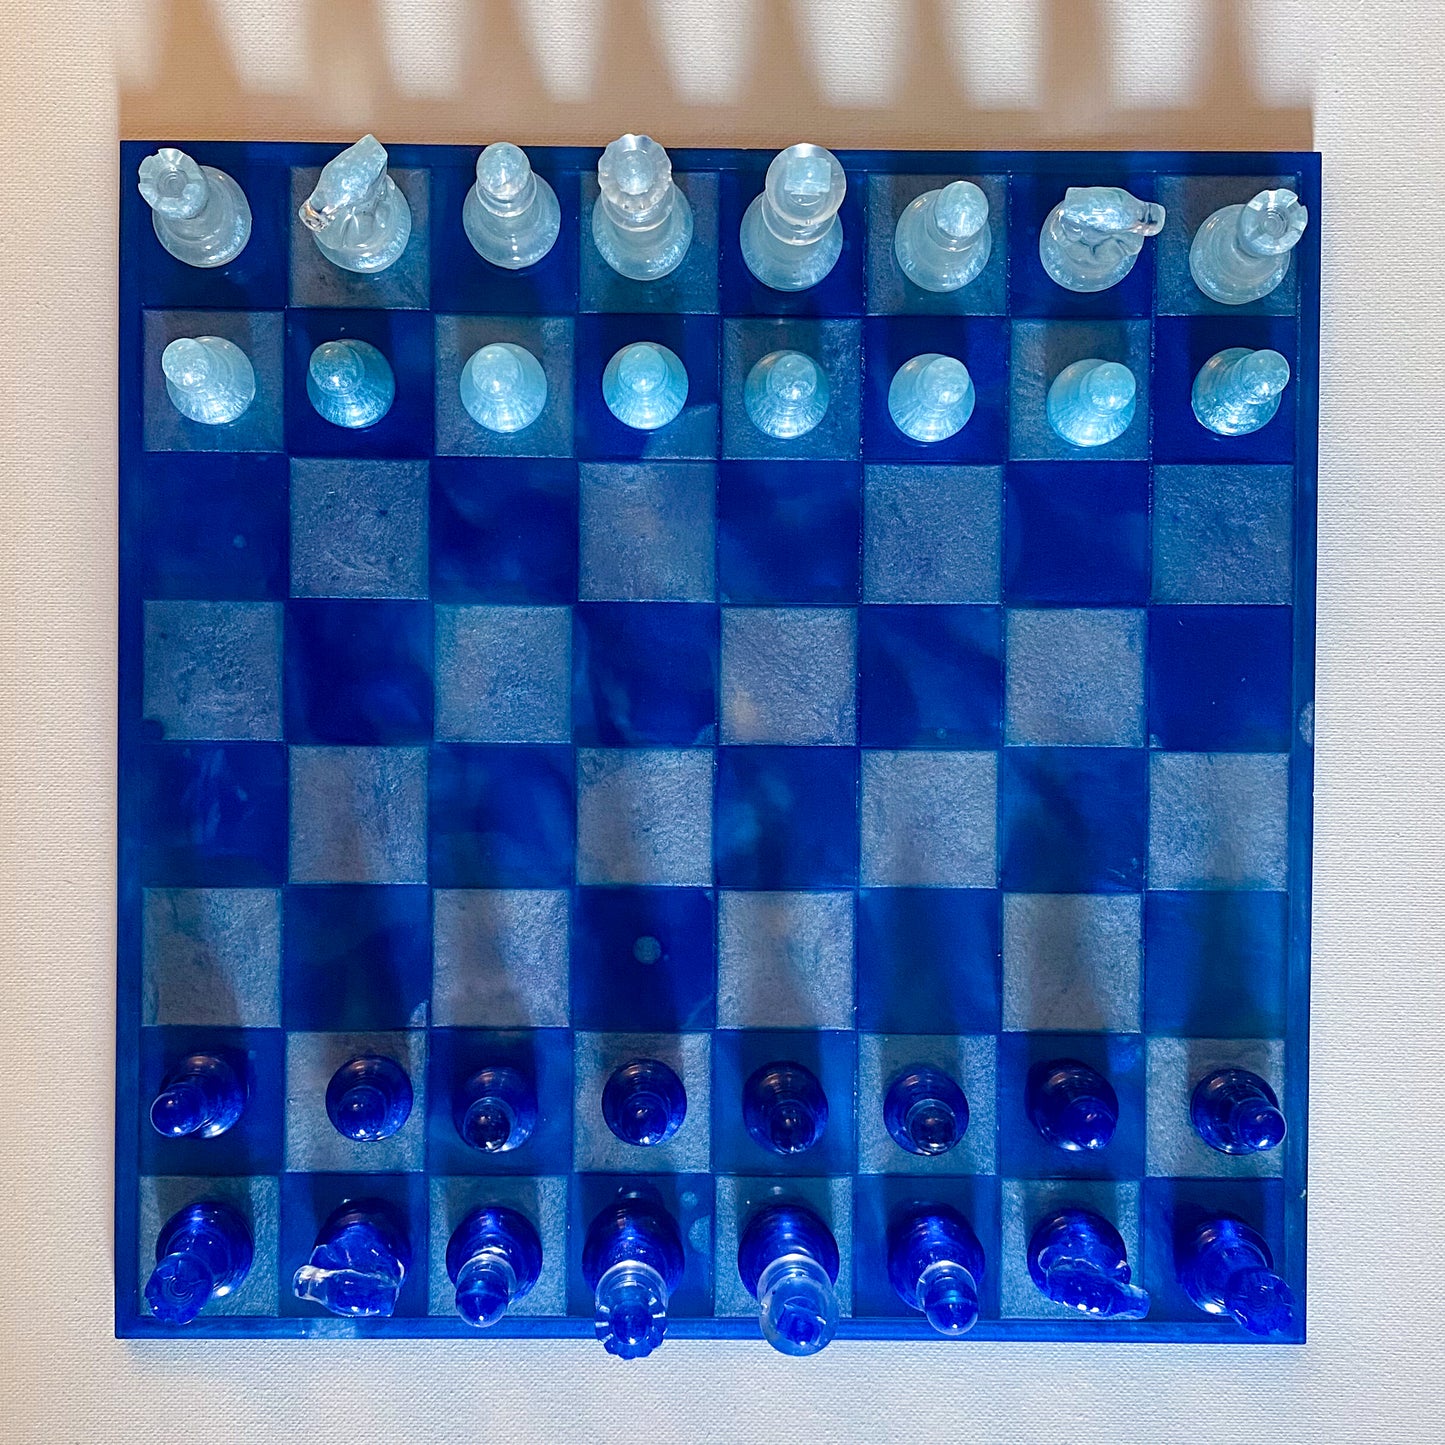 Handmade blue dream chess set